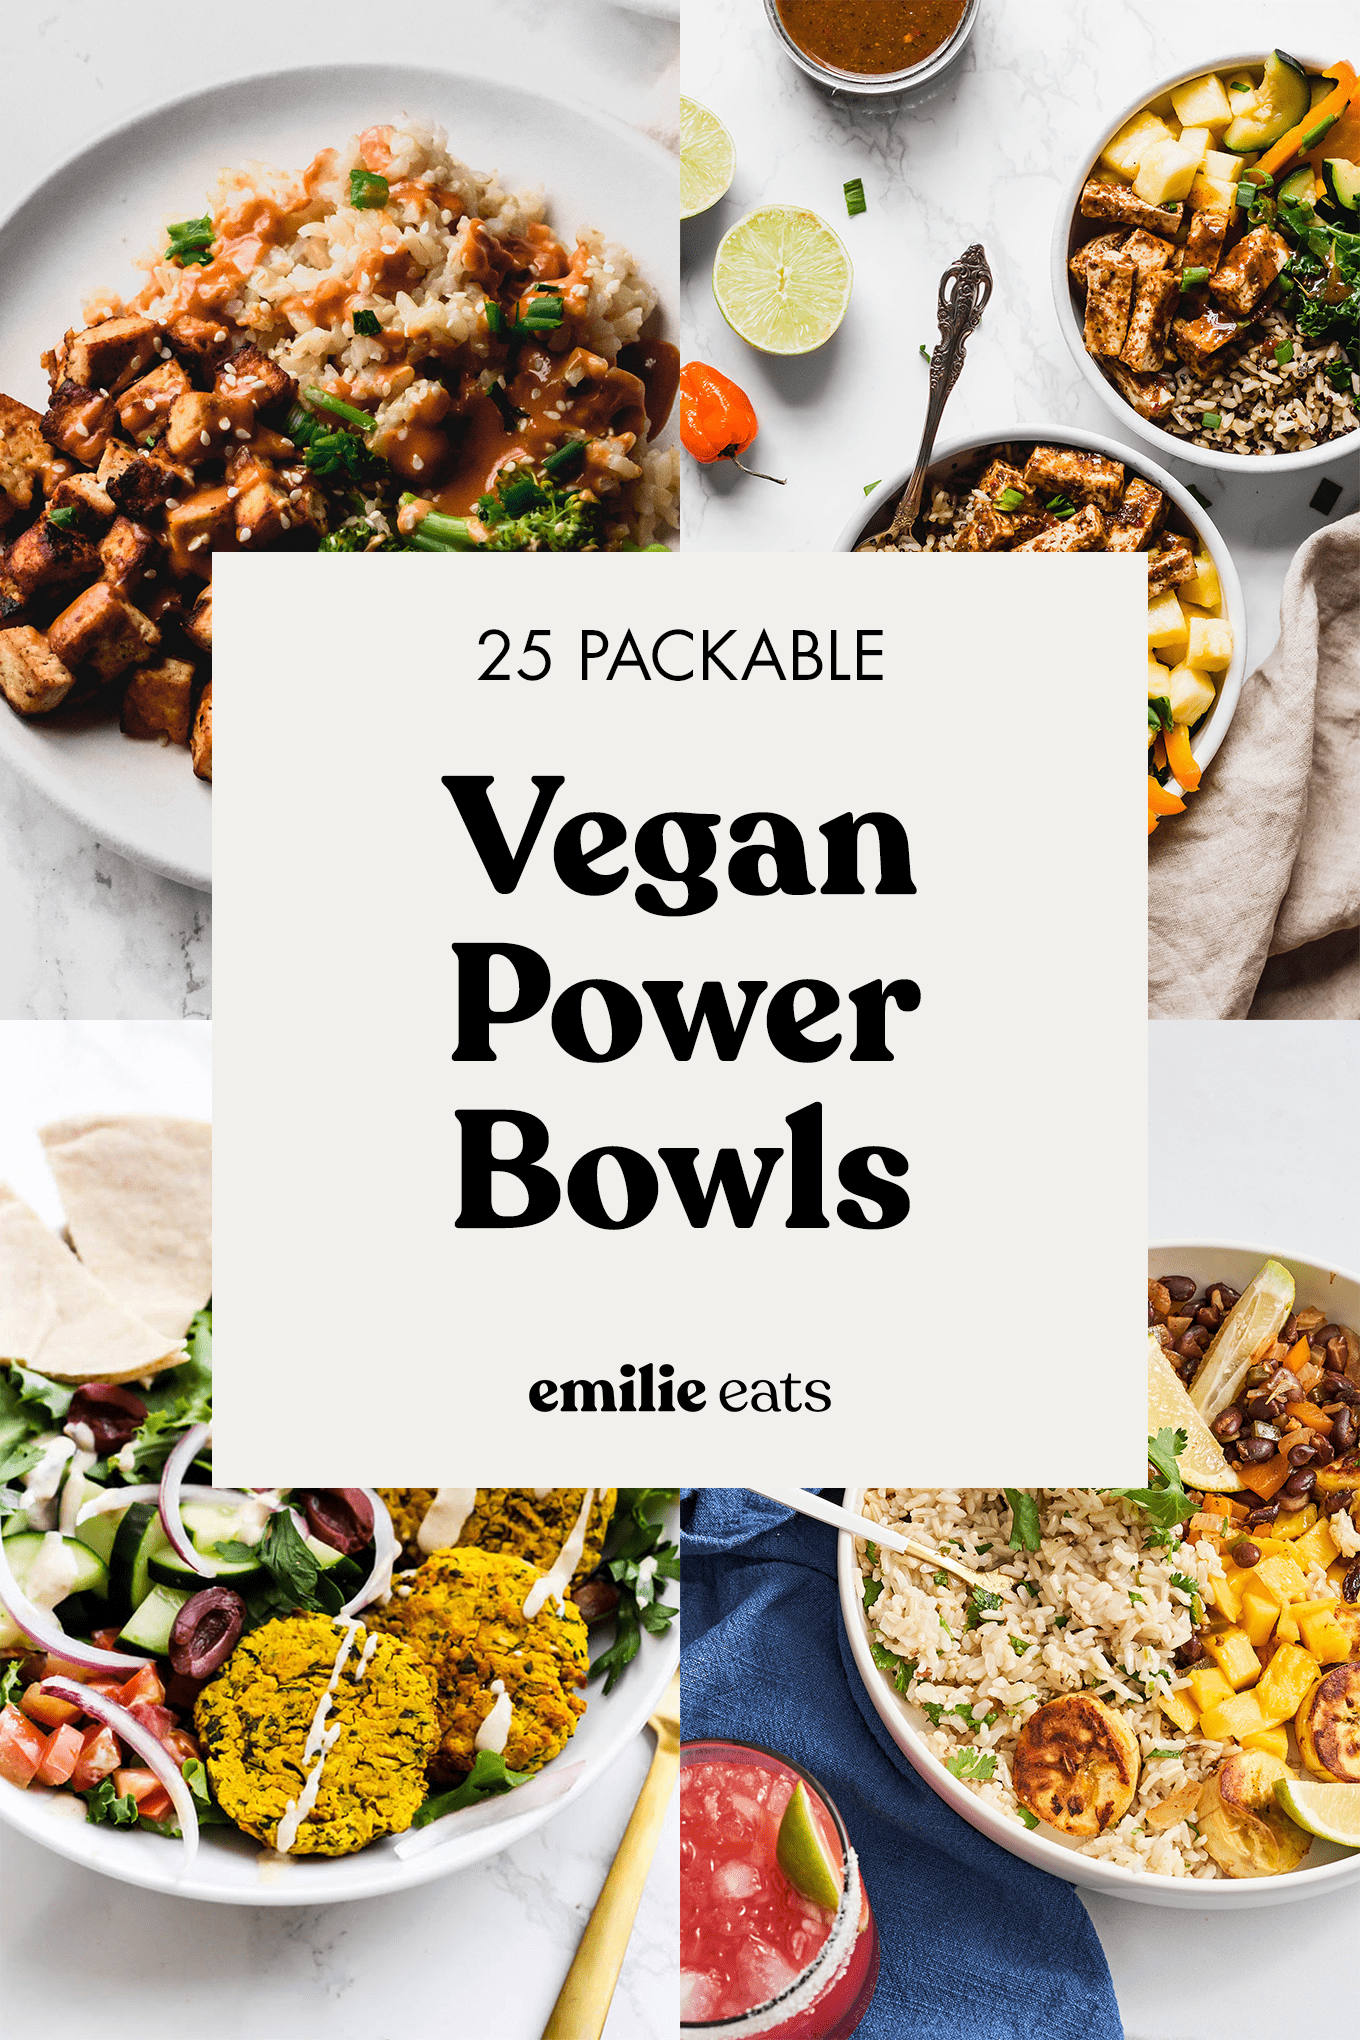 https://www.emilieeats.com/wp-content/uploads/2016/10/25-vegan-power-bowls-packable-lunch-recipes-hero.png